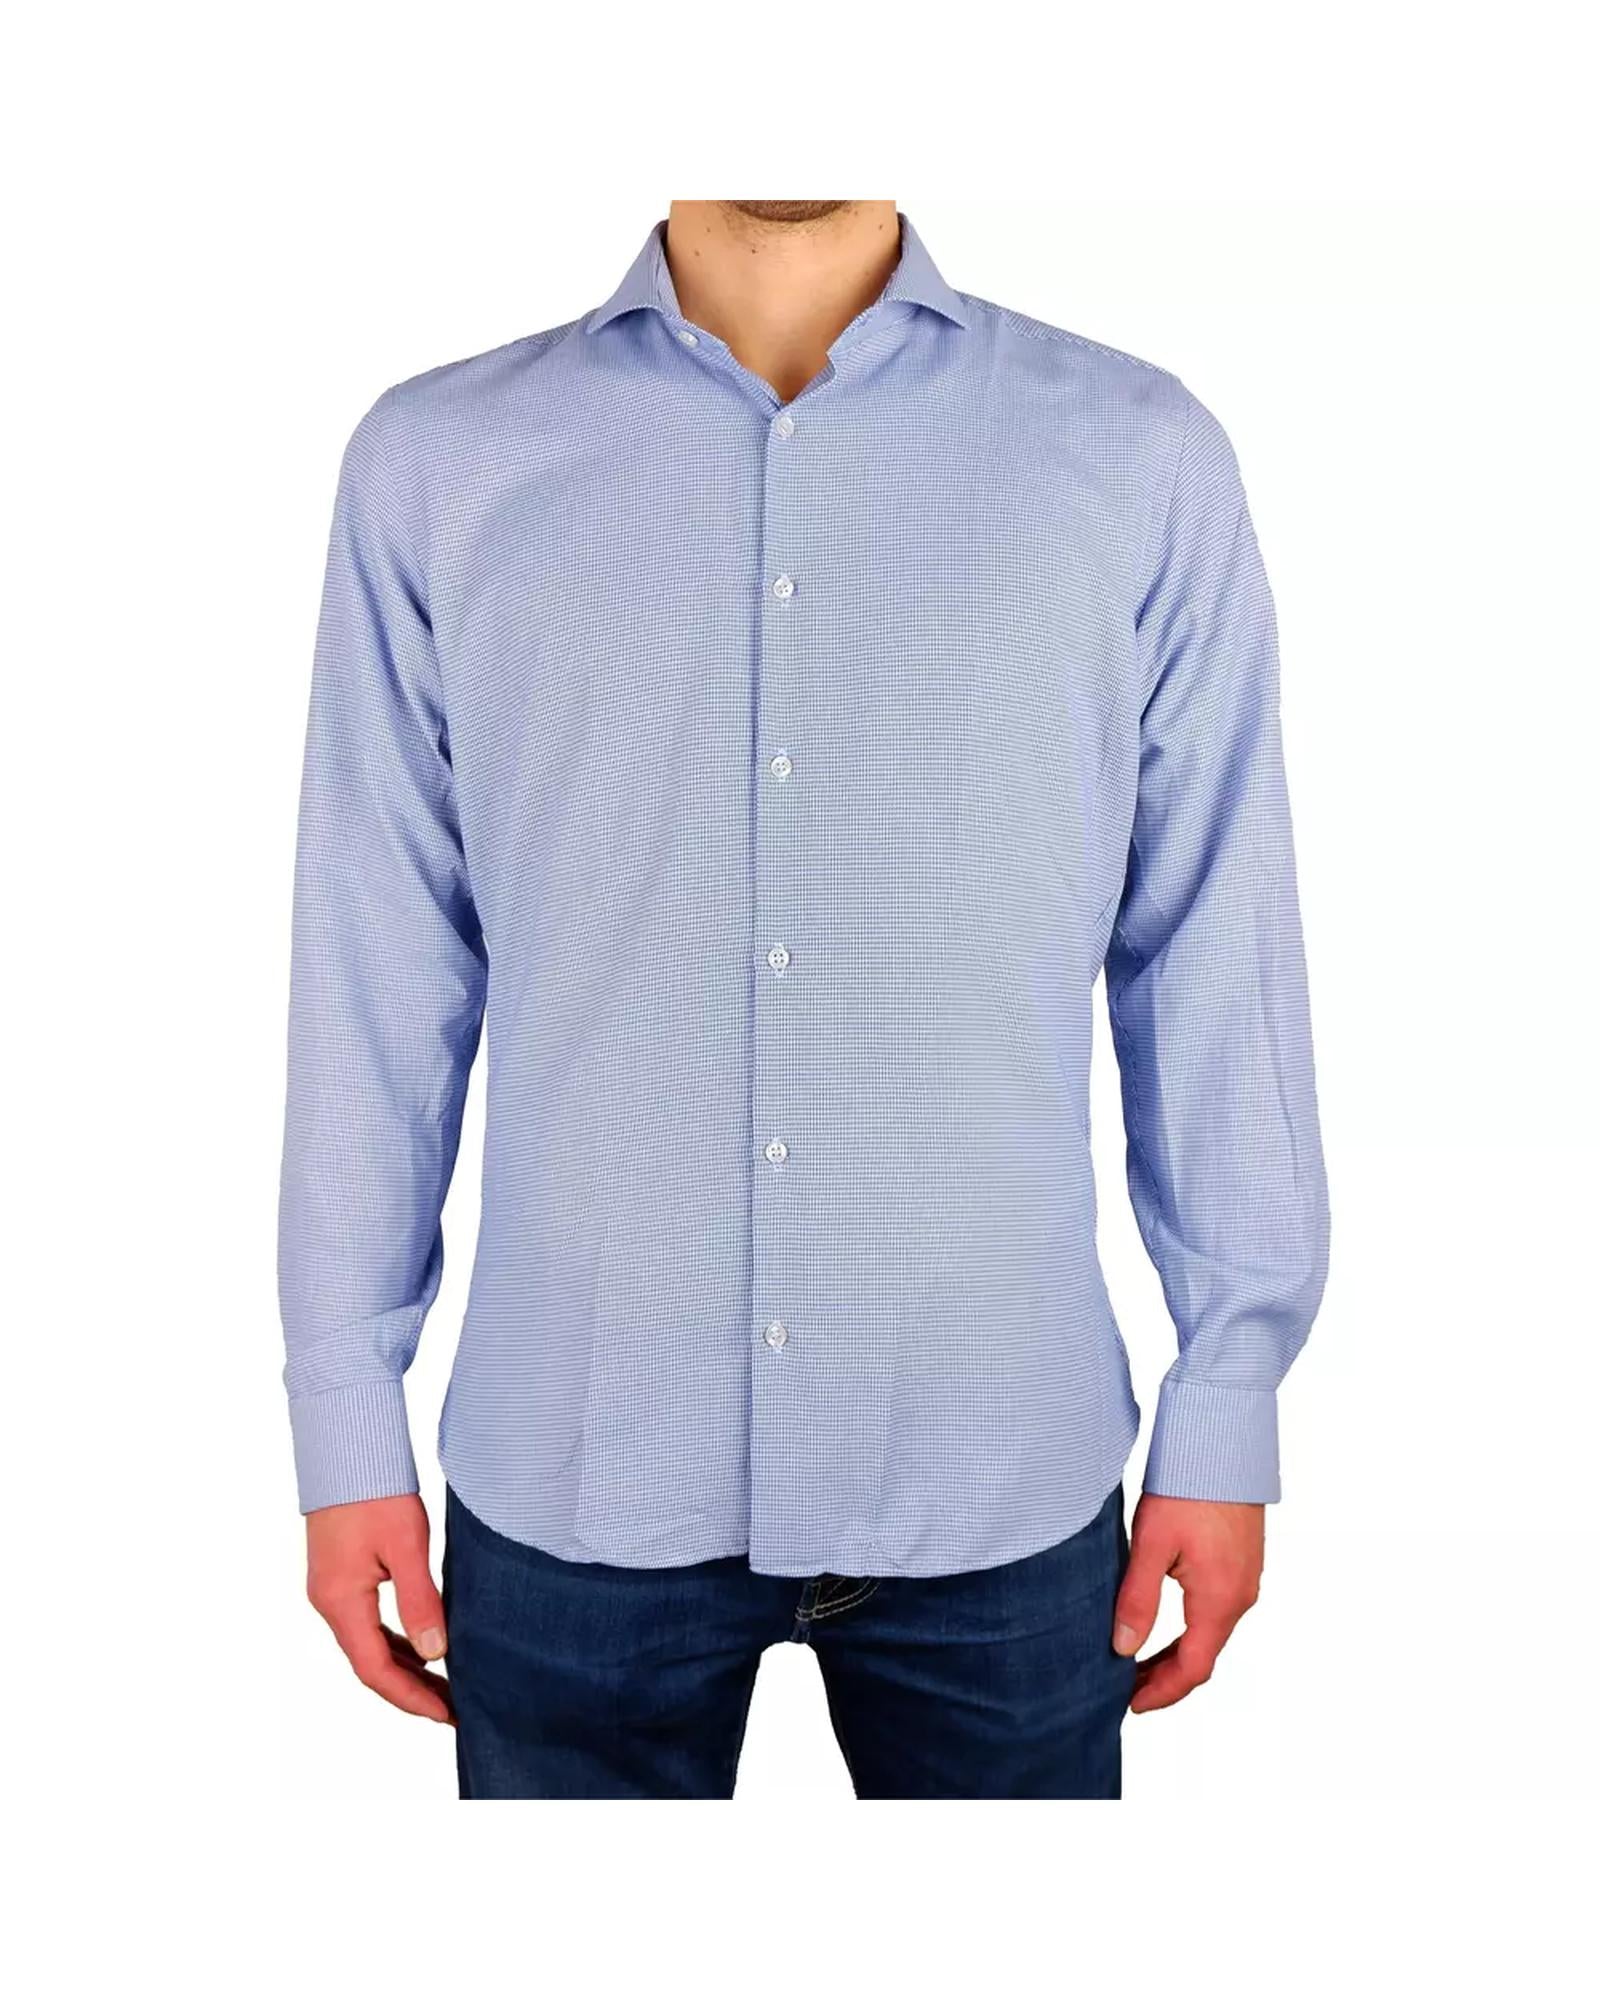 Houndstooth Textured Blue Cotton Shirt 39 IT Men